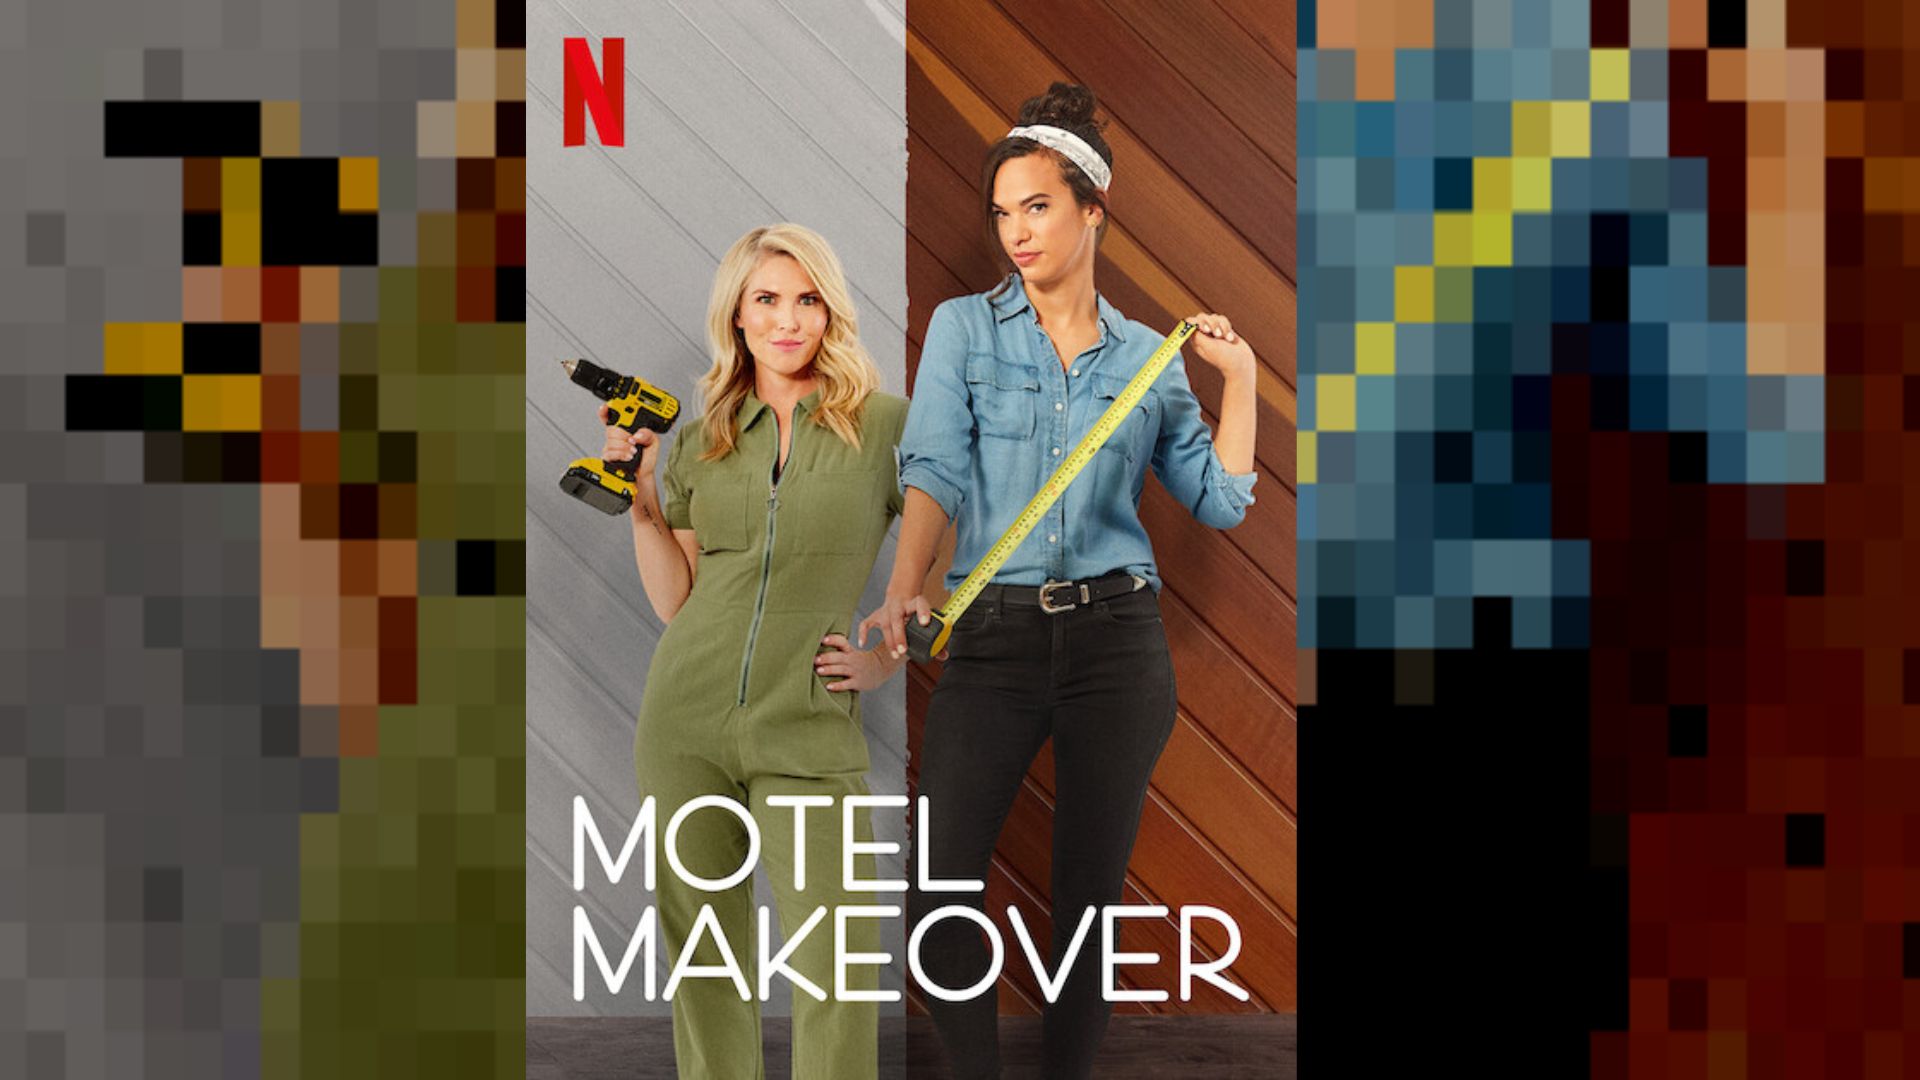 June Motel Makeover Netflix